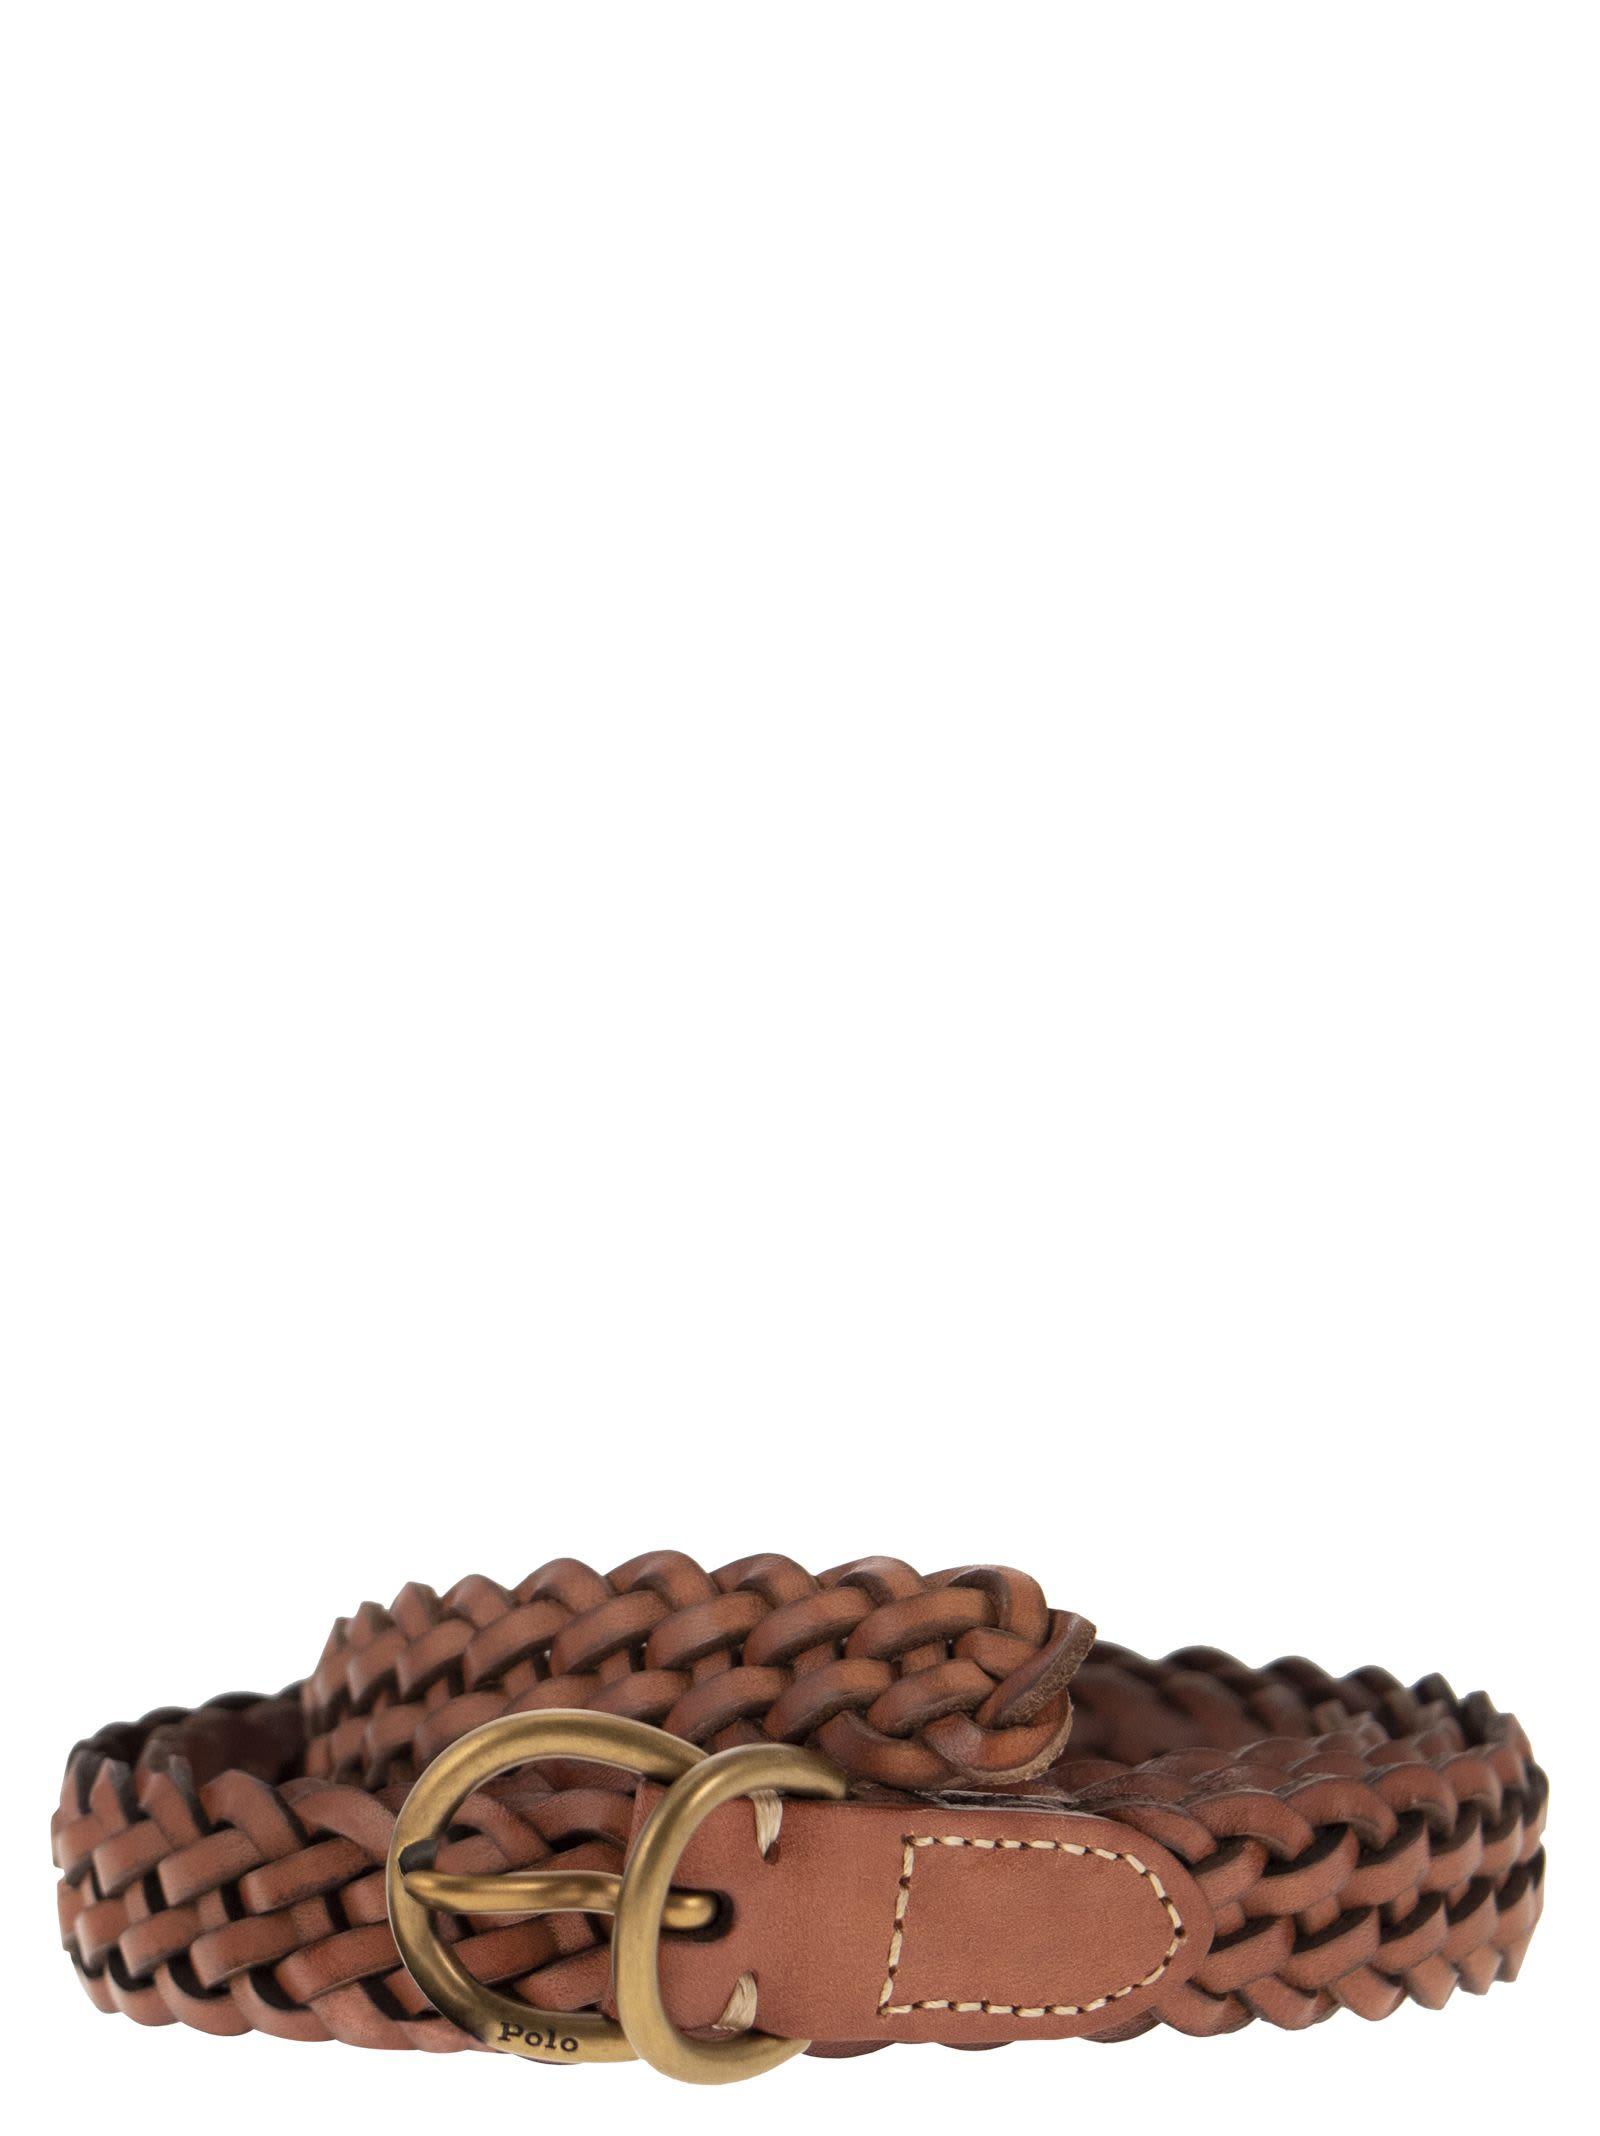 Polo Ralph Lauren Woven Leather Belt in Brown | Lyst